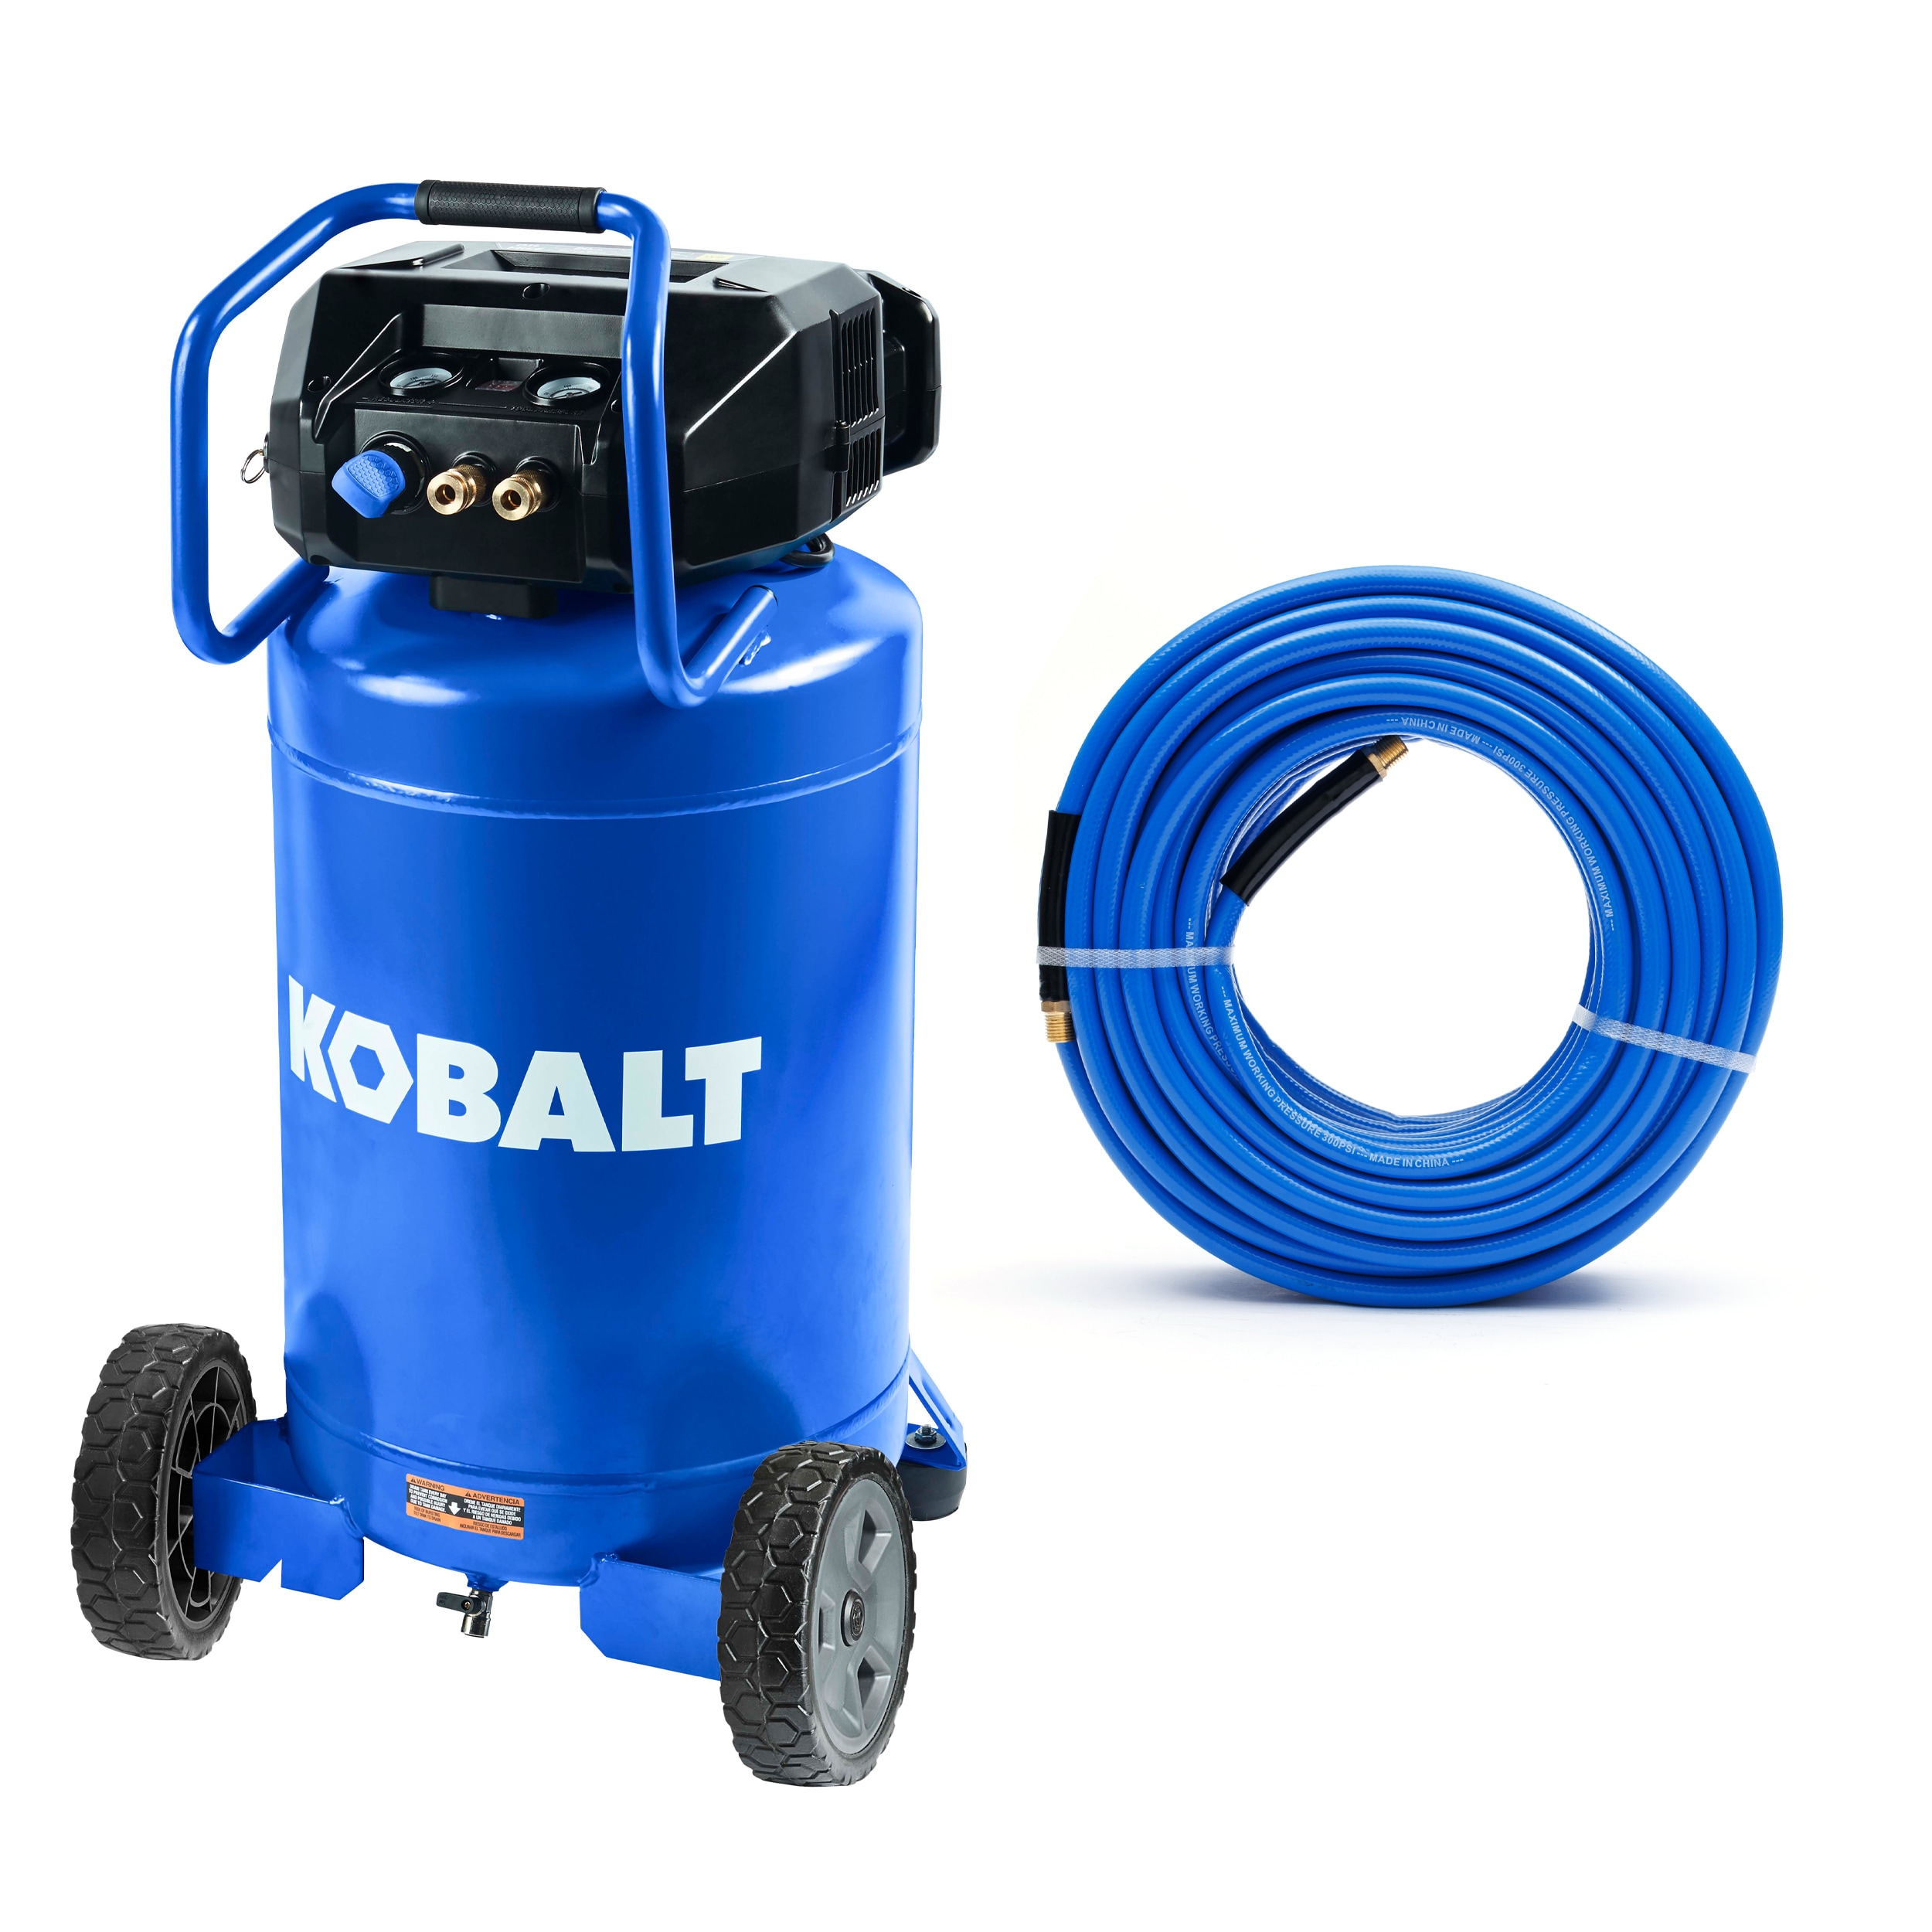 Kobalt 20-Gal Compressor and 3/8-IN x 50-FT PVC Air Hose